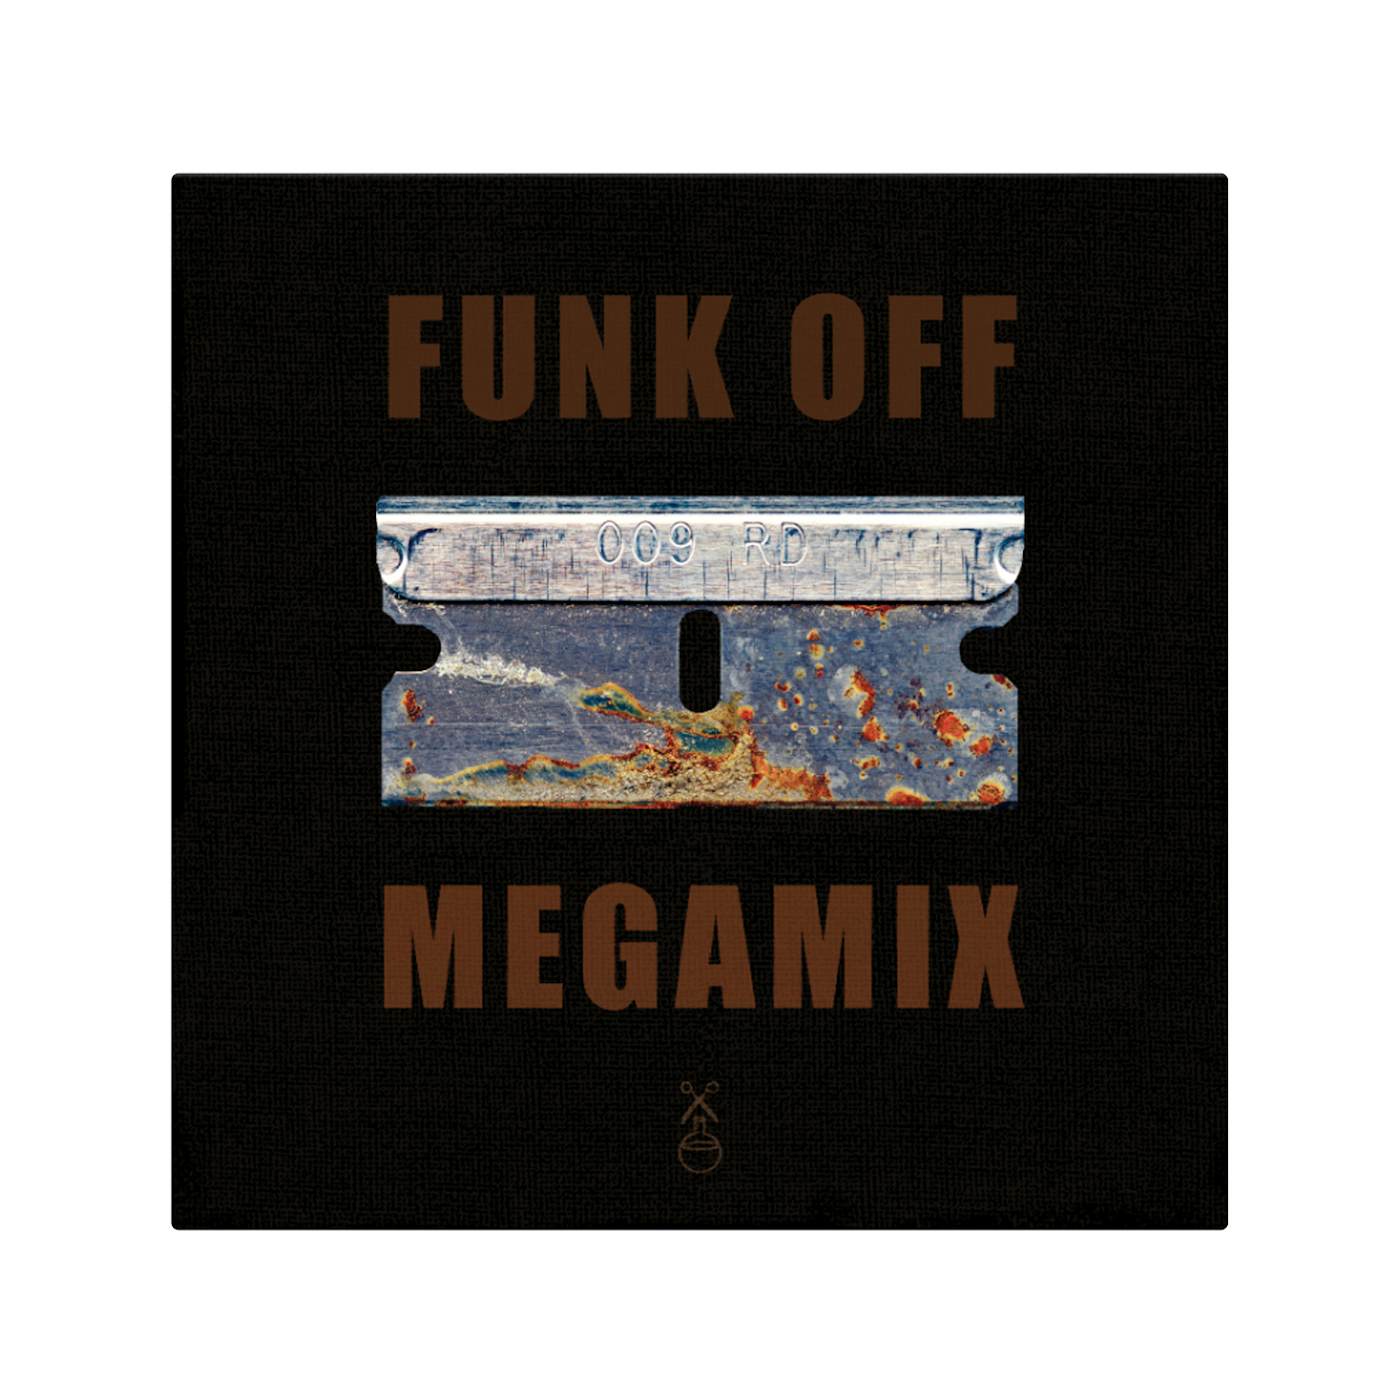 Cut Chemist FUNK OFF MEGAMIX Vinyl Record